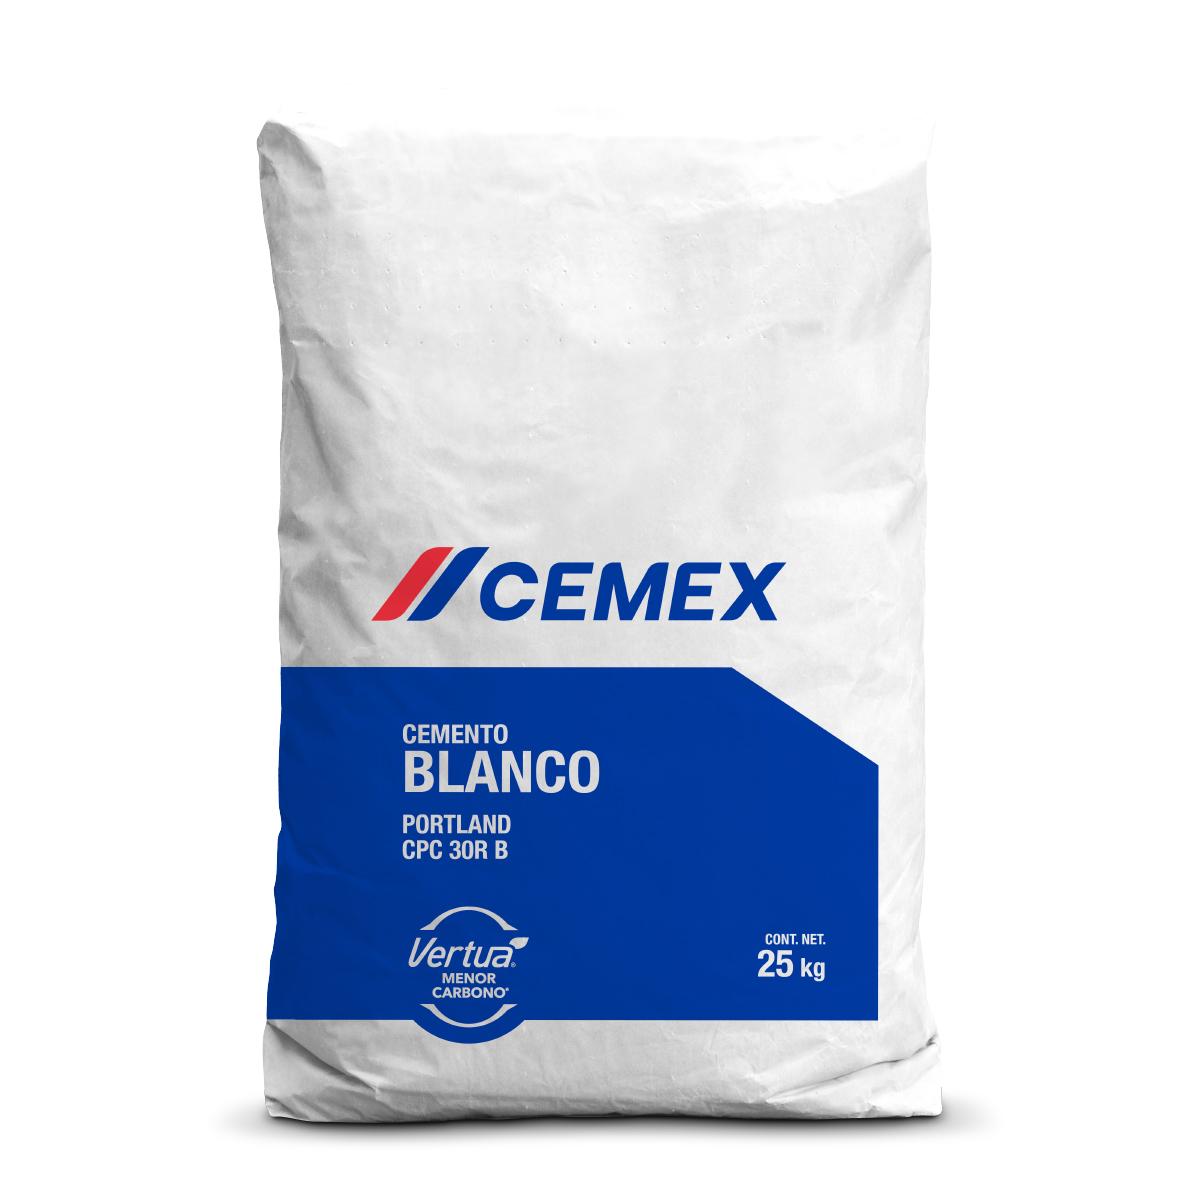 Cemento Blanco Fortaleza, CPC 40, saco de 25kg - Proveedora del Centro